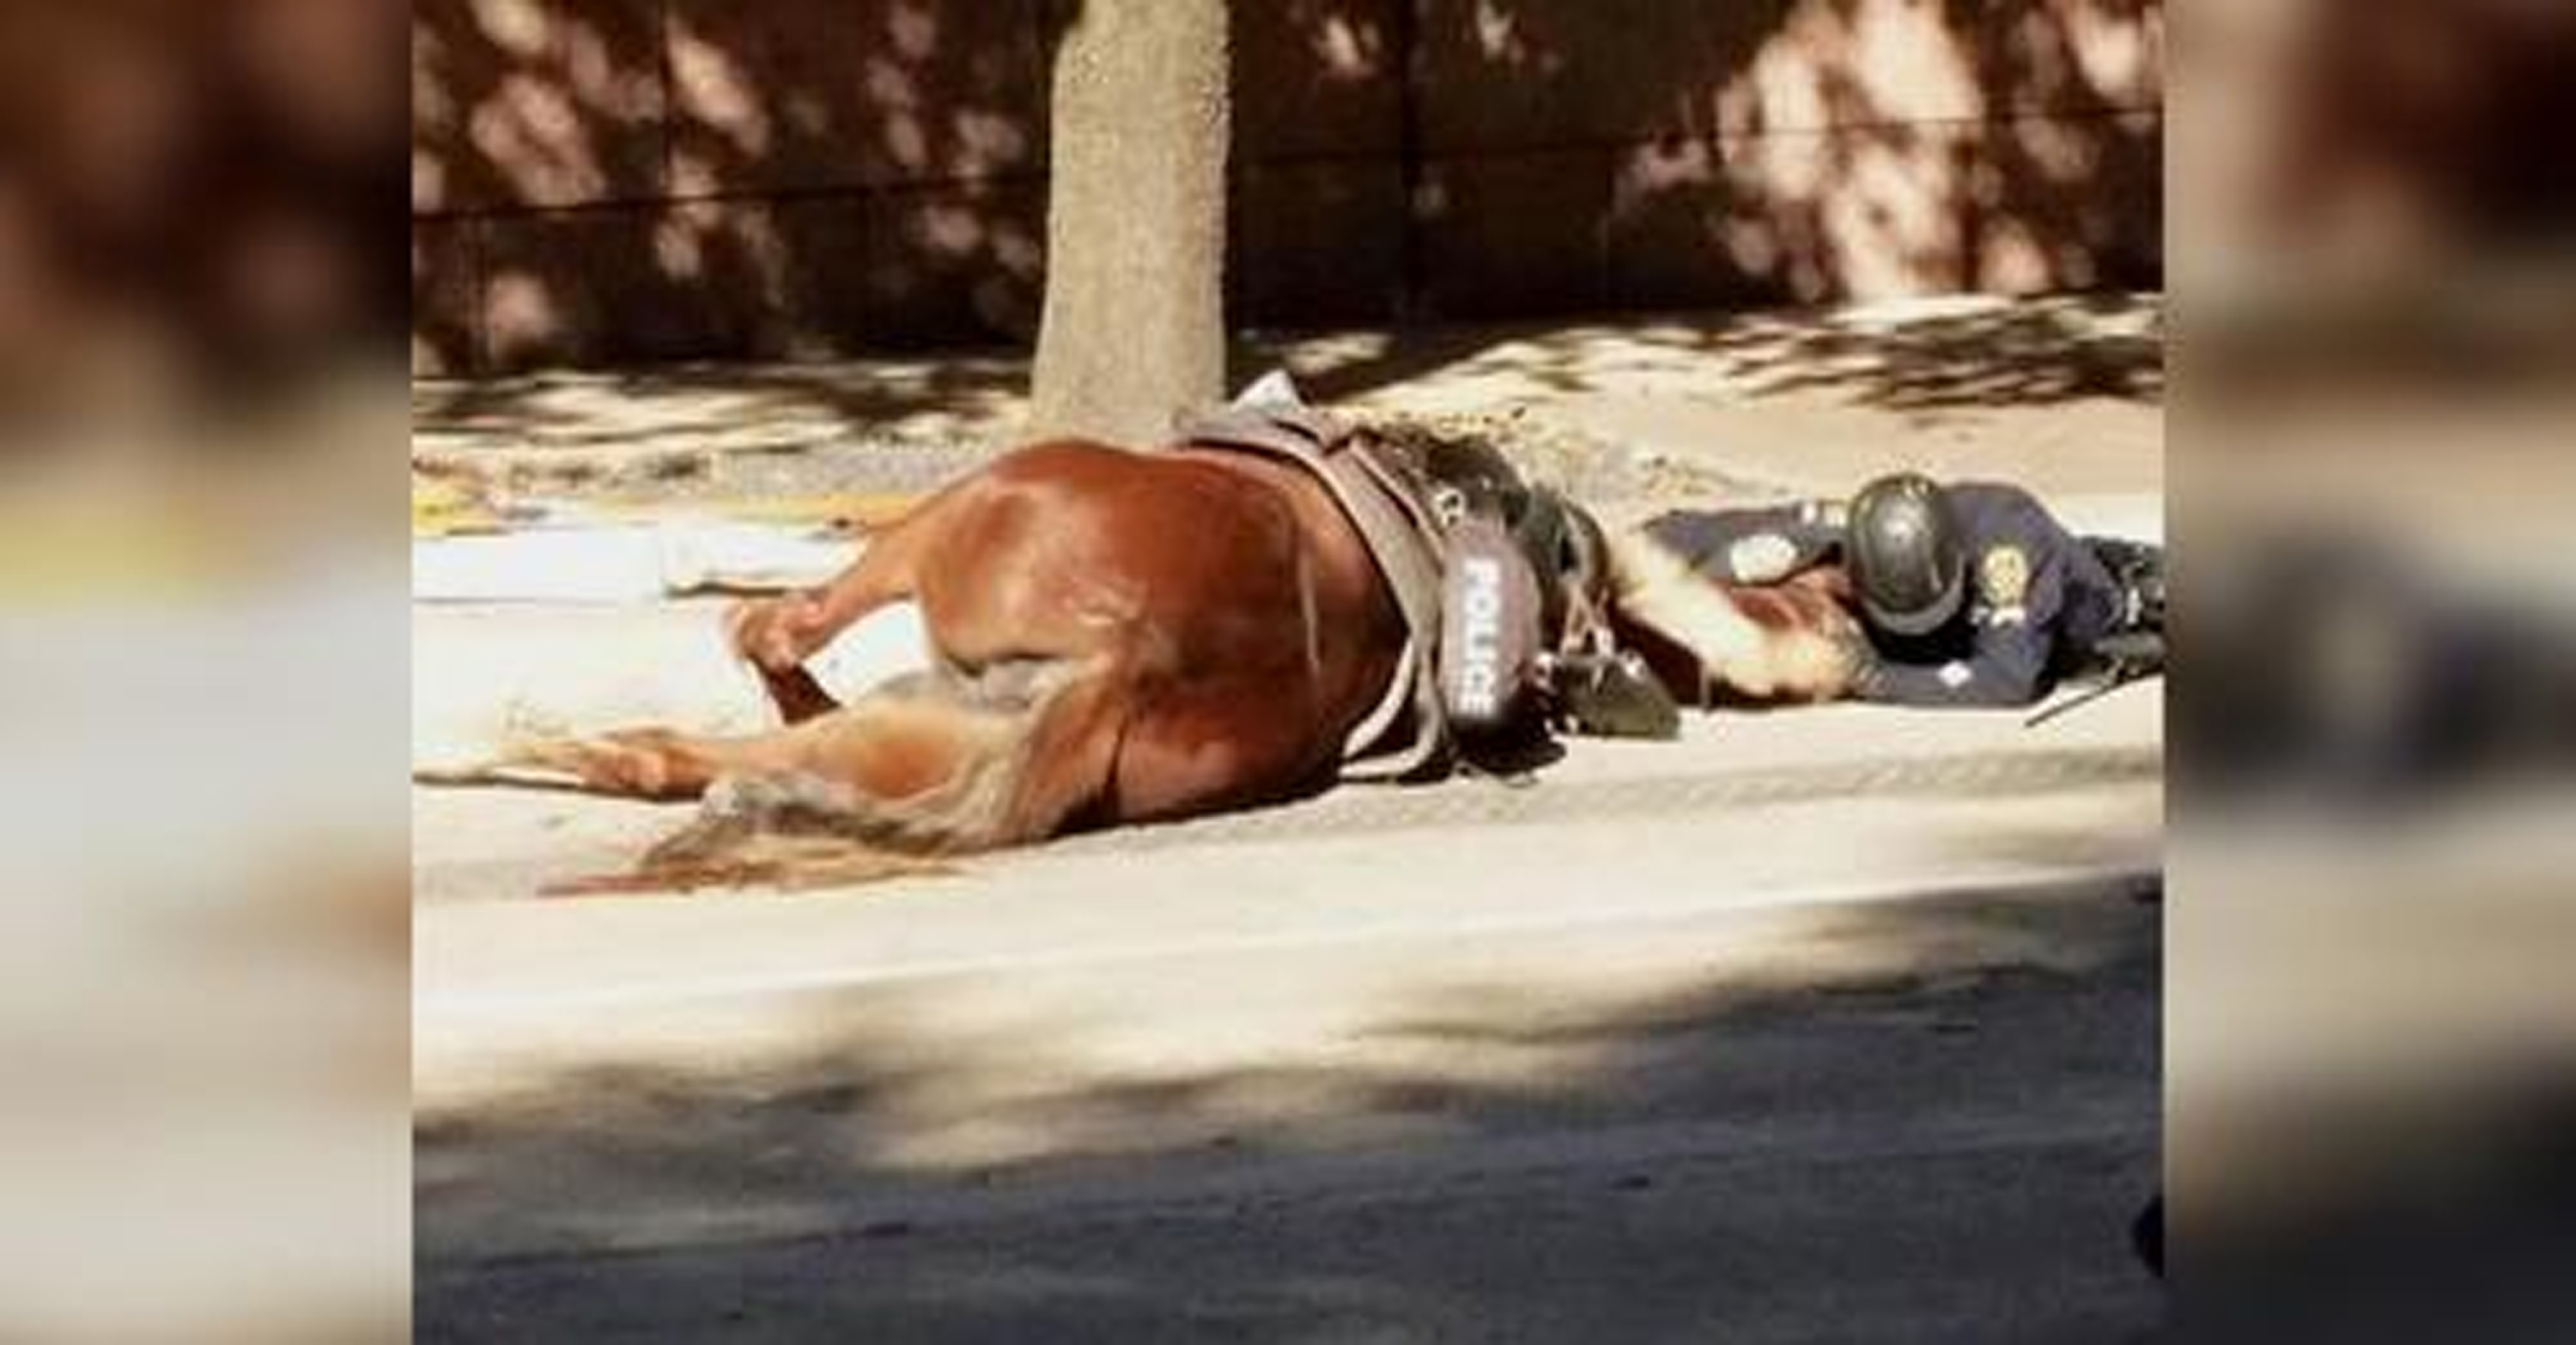 Cop lies on street to comfort his fallen horse in her final moments